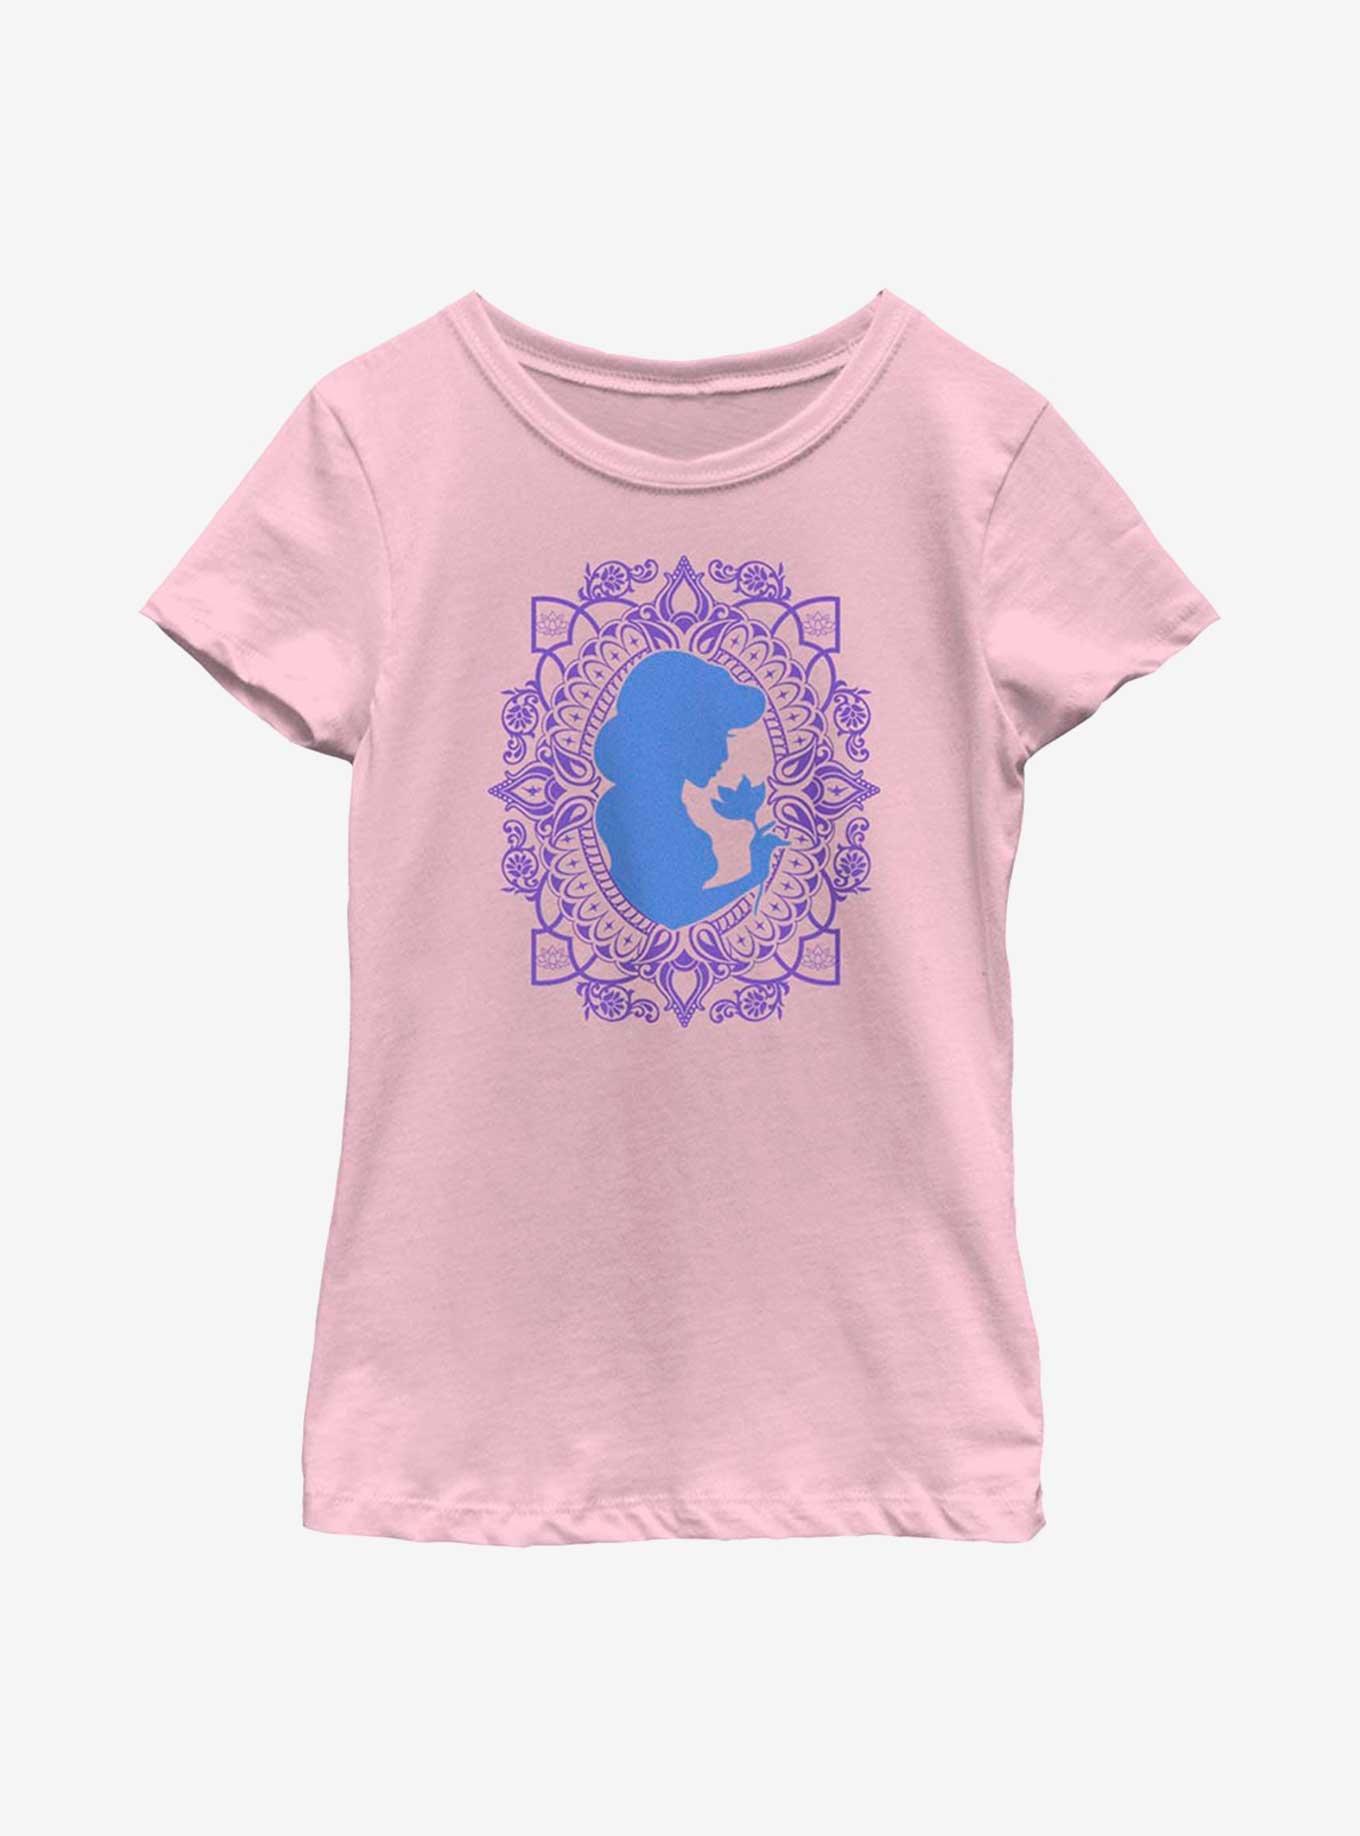 Disney Aladdin 30th Anniversary Jasmine Flower Frame Silhouette Youth Girls T-Shirt, PINK, hi-res